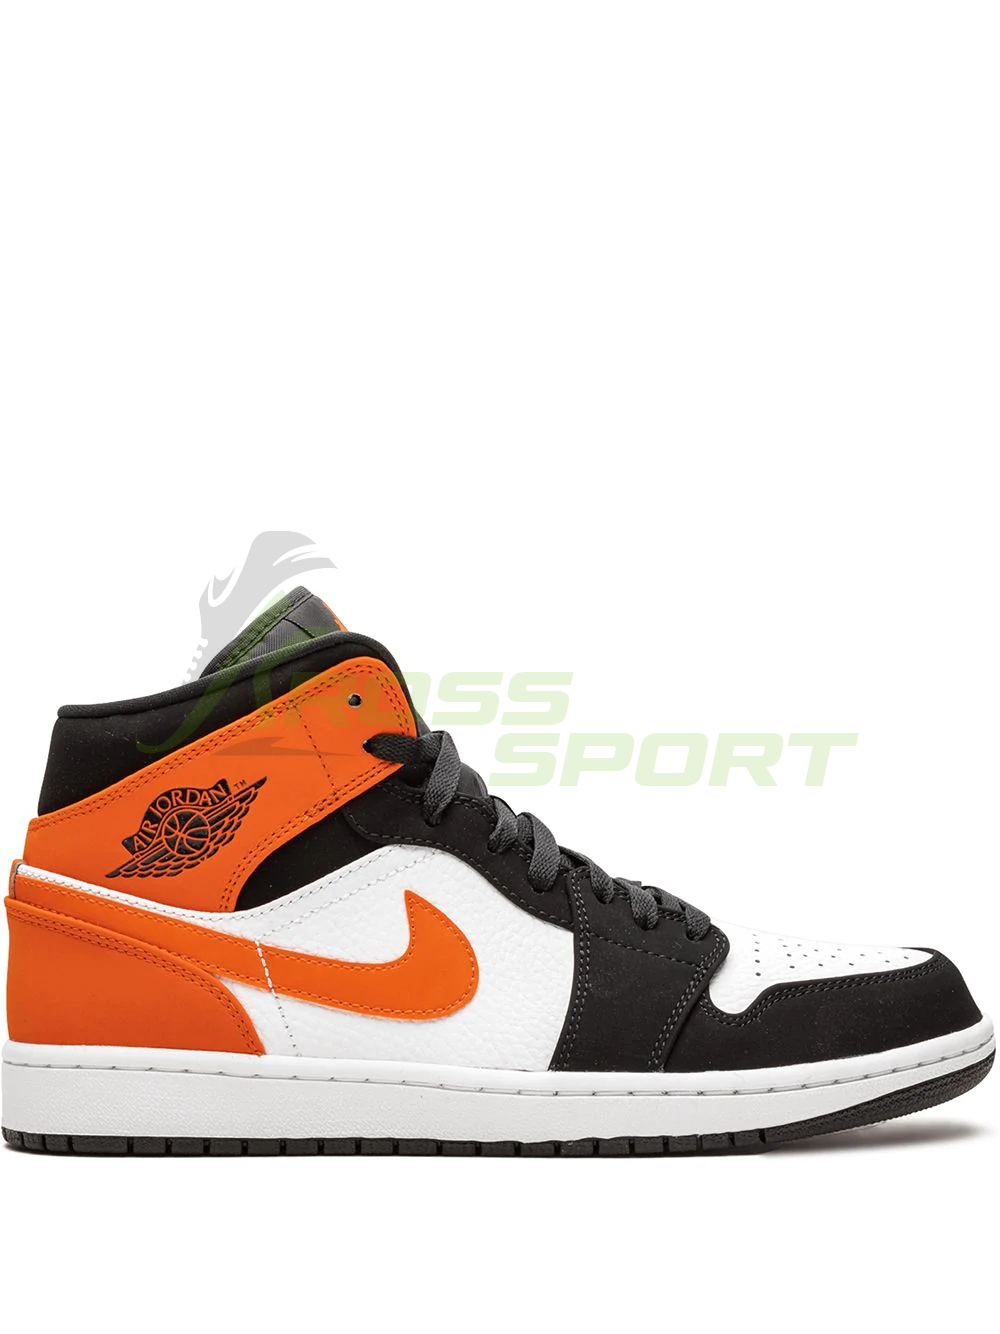  Nike Air Jordan 1 Retro Black/Orange/White